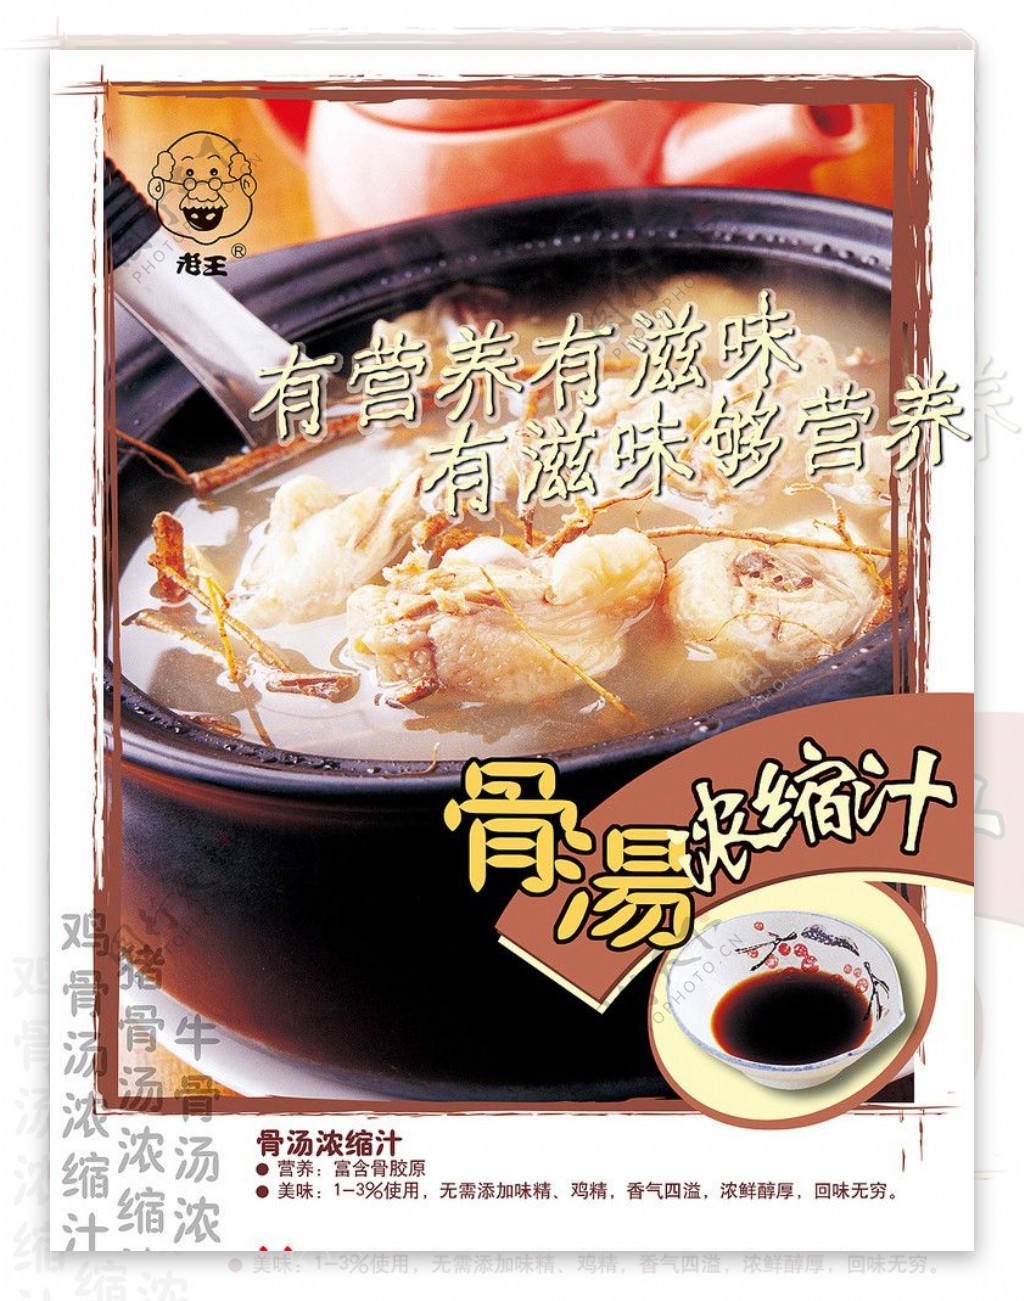 骨汤浓缩汁调料骨汤调料煲汤调料炖肉调料厨房调料佐料图片